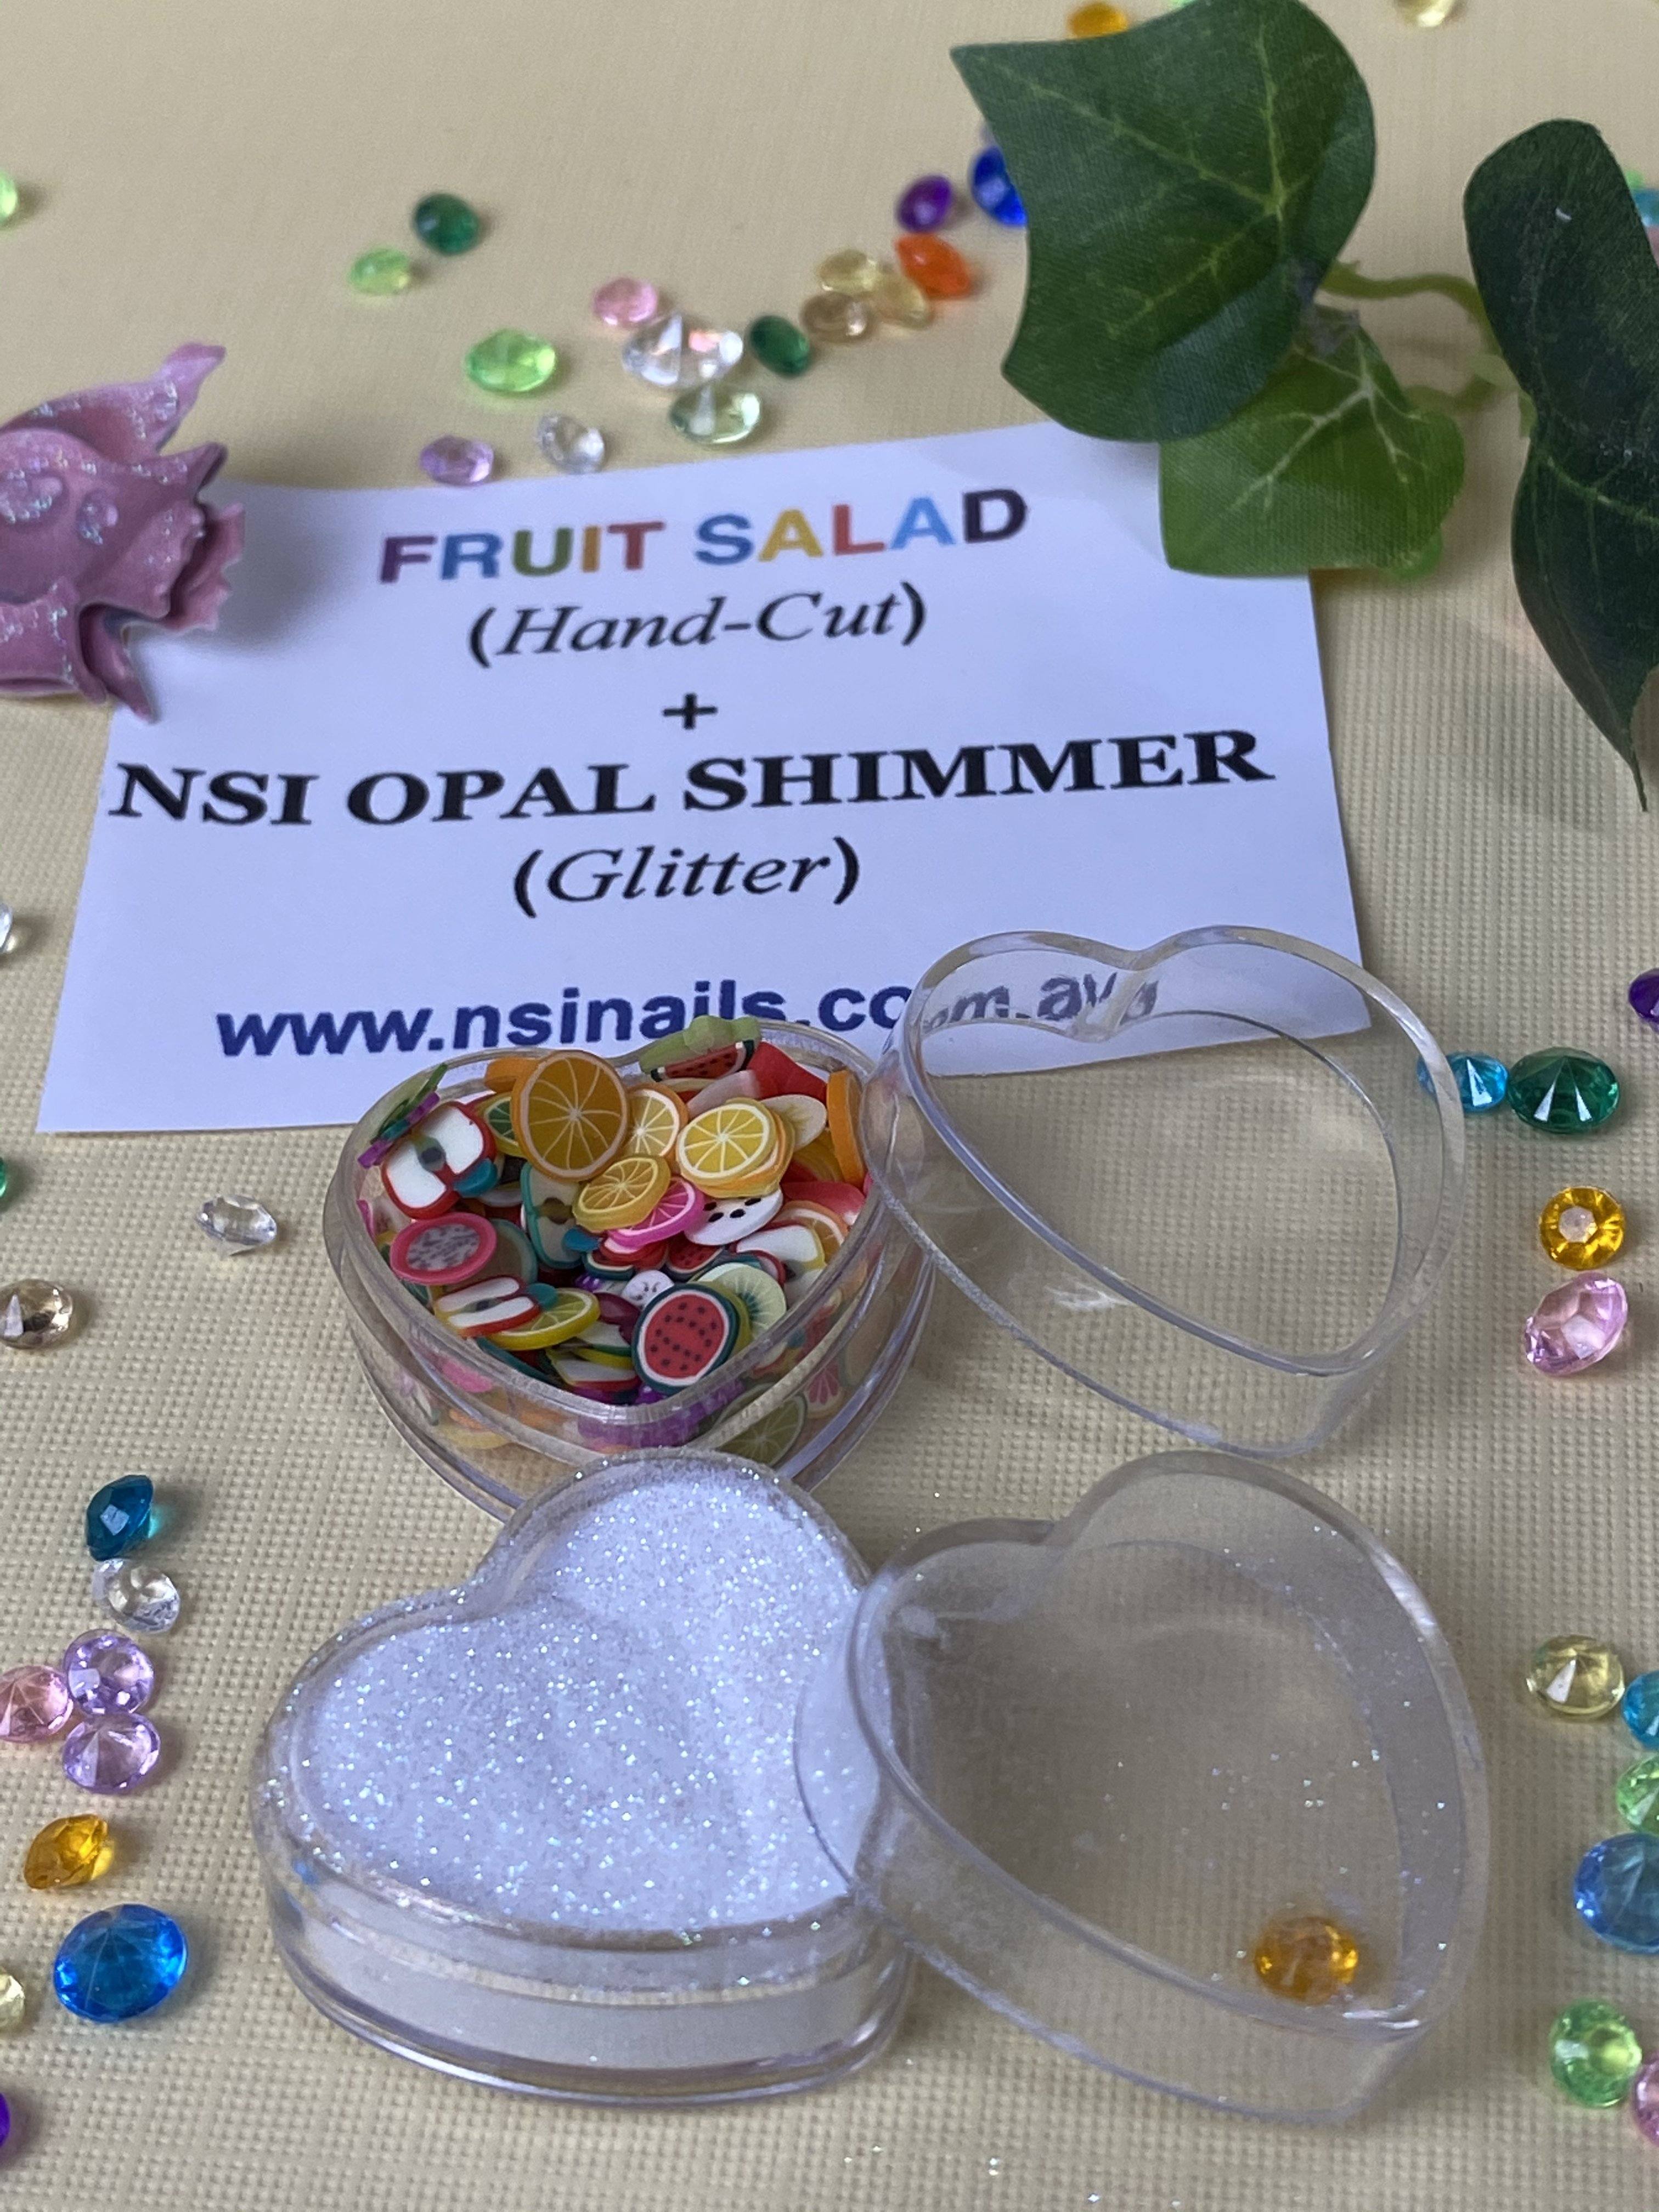 Fruit Salad (Hand-Cut) + NSI Opal Shimmer (Glitter) - NSI Australia